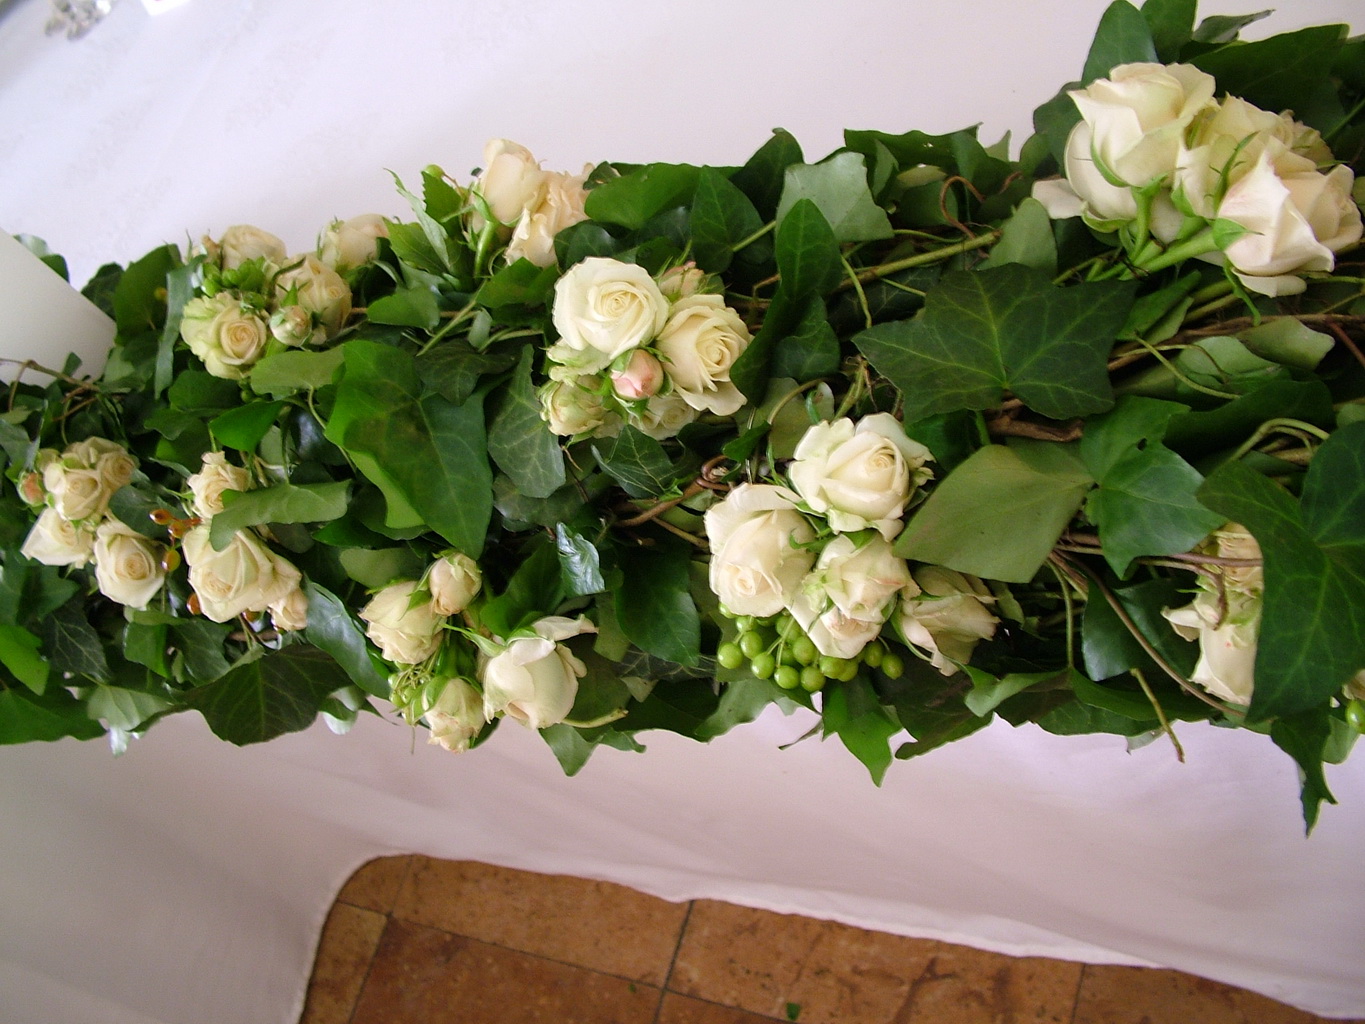 flower delivery Budapest - Main table centerpiece (spray roses, cream), Dudok Budapest, wedding